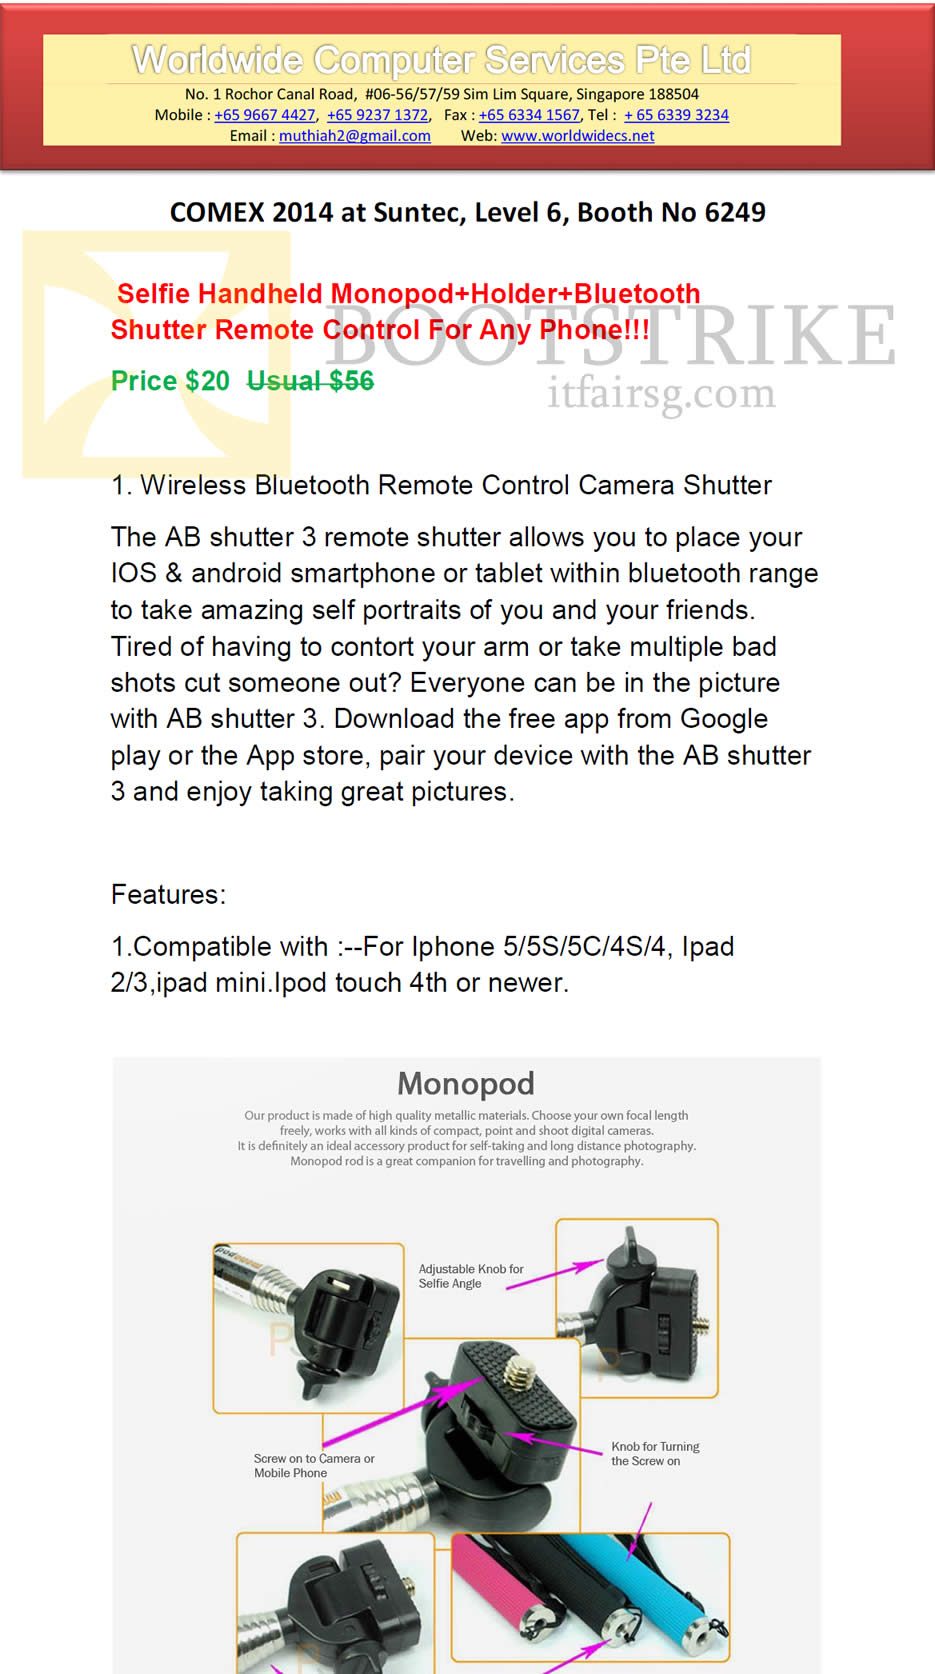 COMEX 2014 price list image brochure of Worldwide Computer Services Selfie Handheld Monopod, Holder, Bluetooth Shutter Remote Control